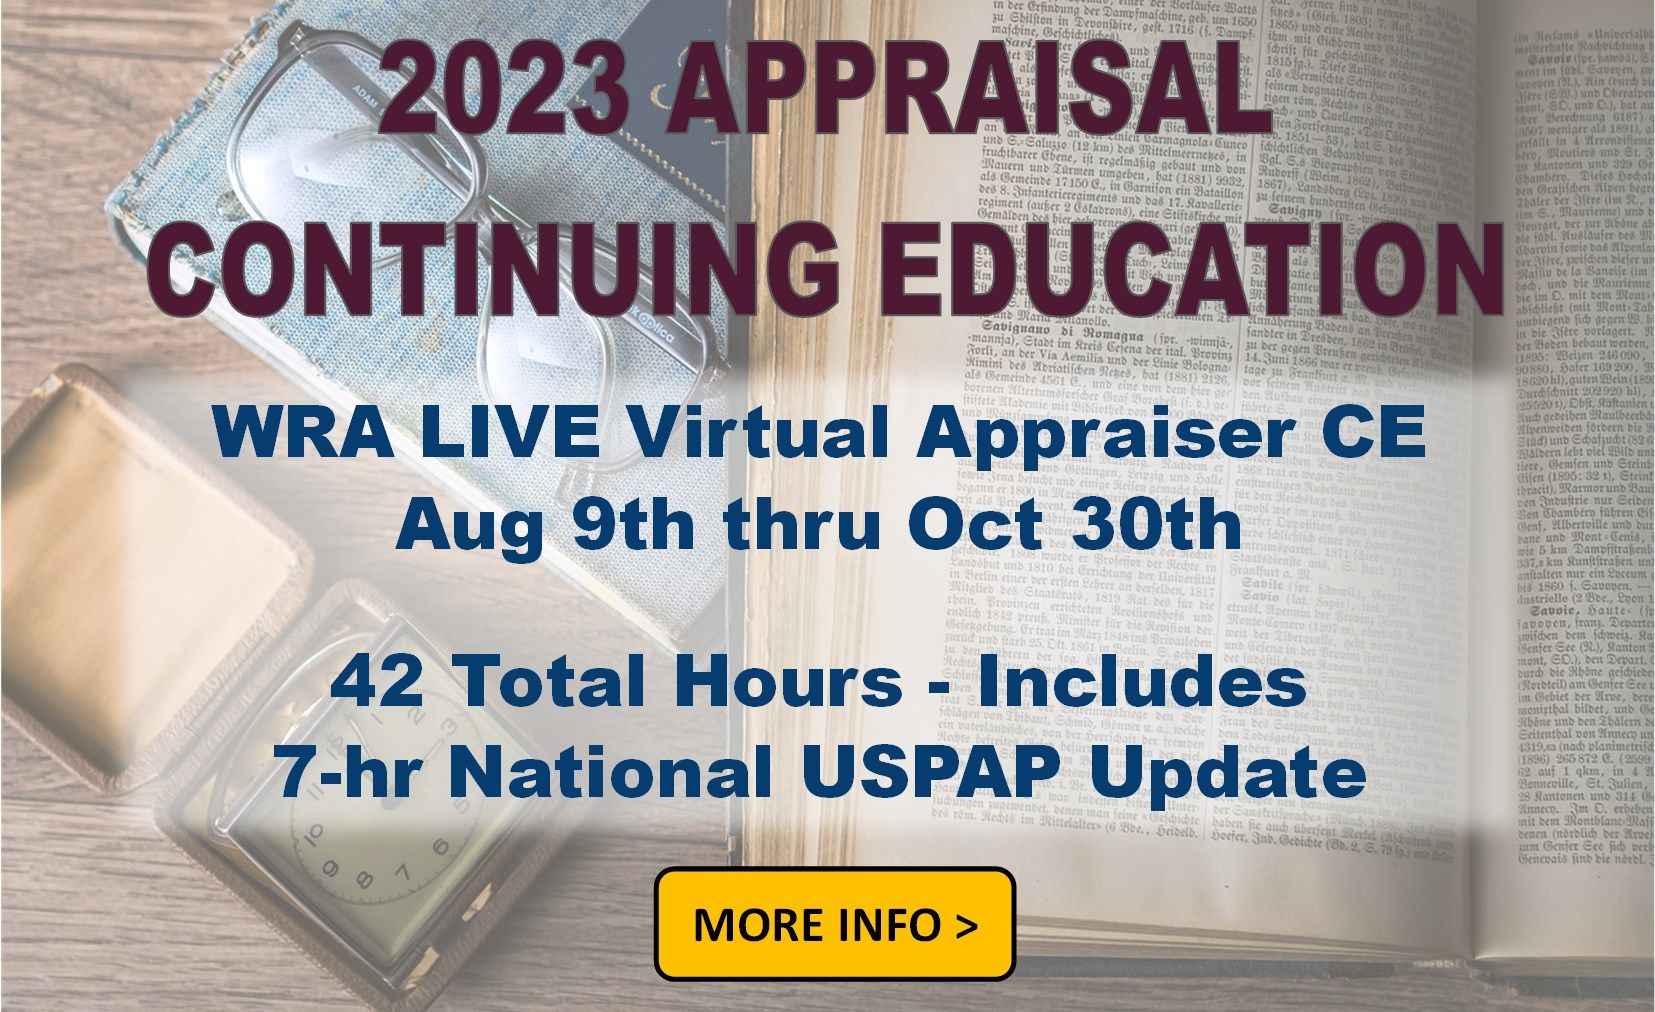 2023 Appraisal CE